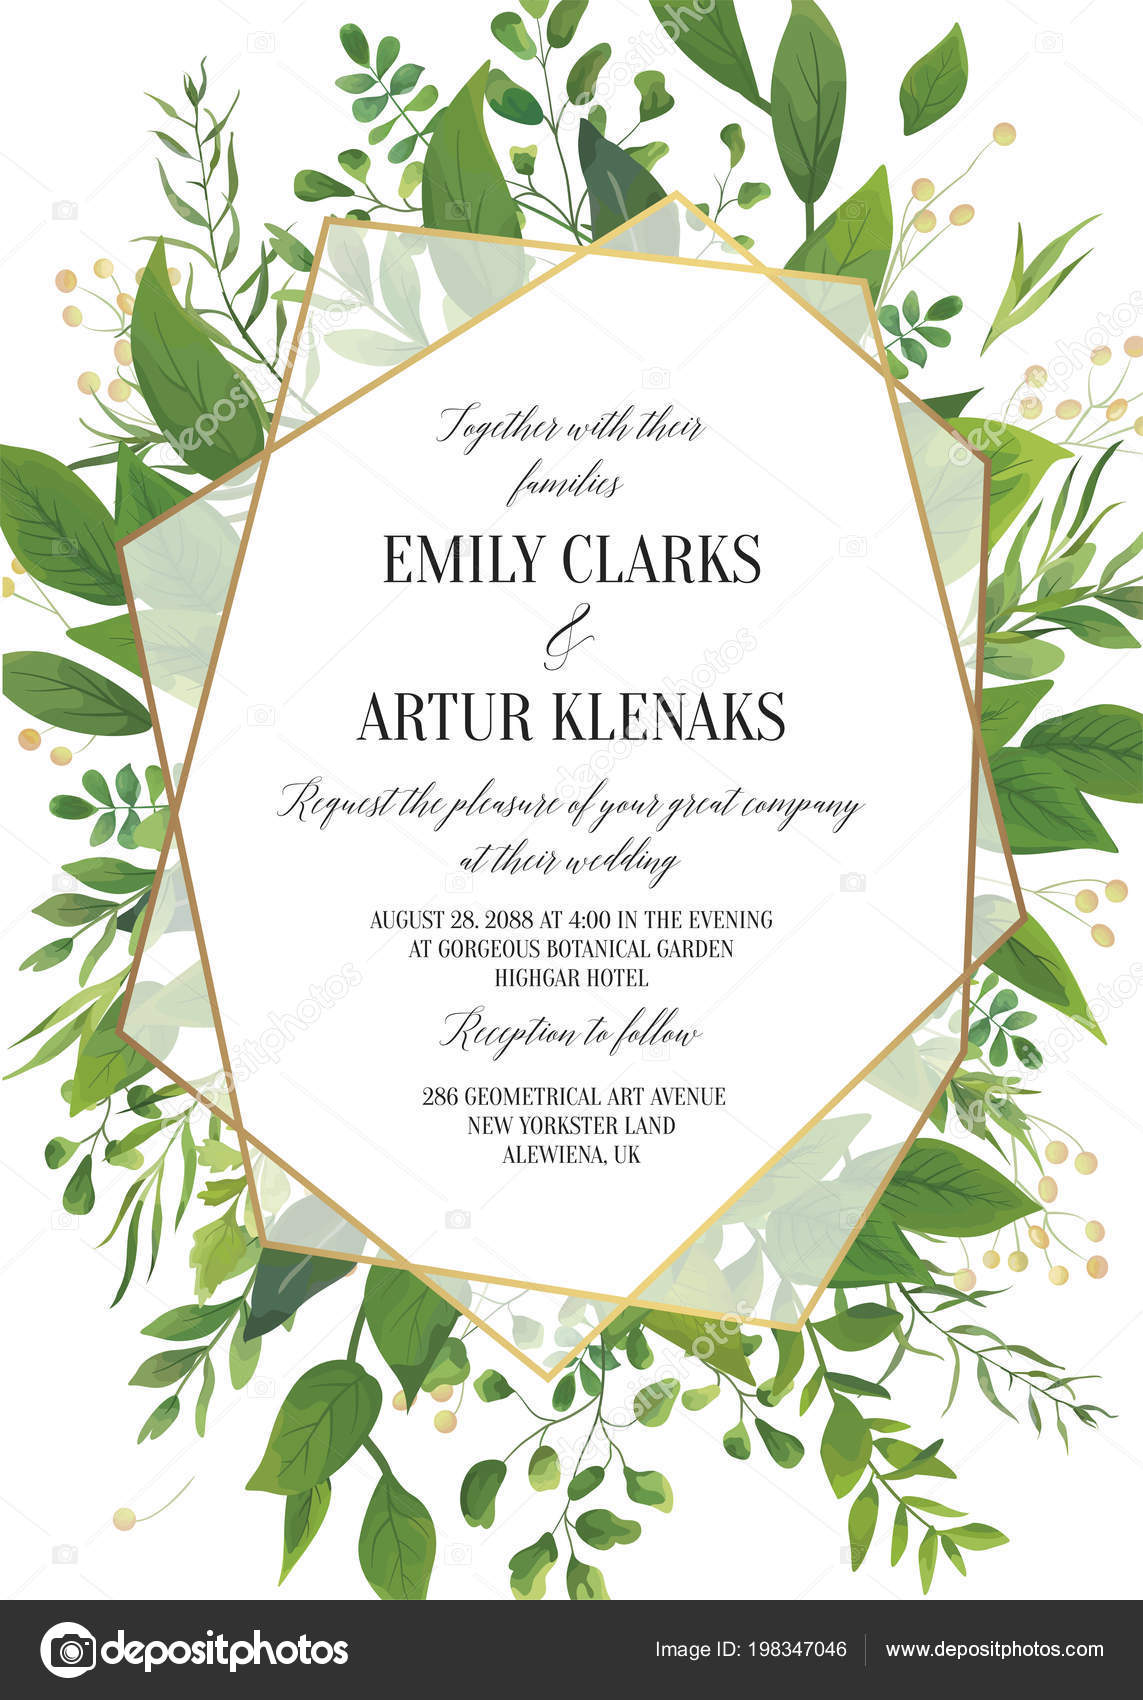 Download Vector: greenery floral | Wedding Invitation Floral Vector ...